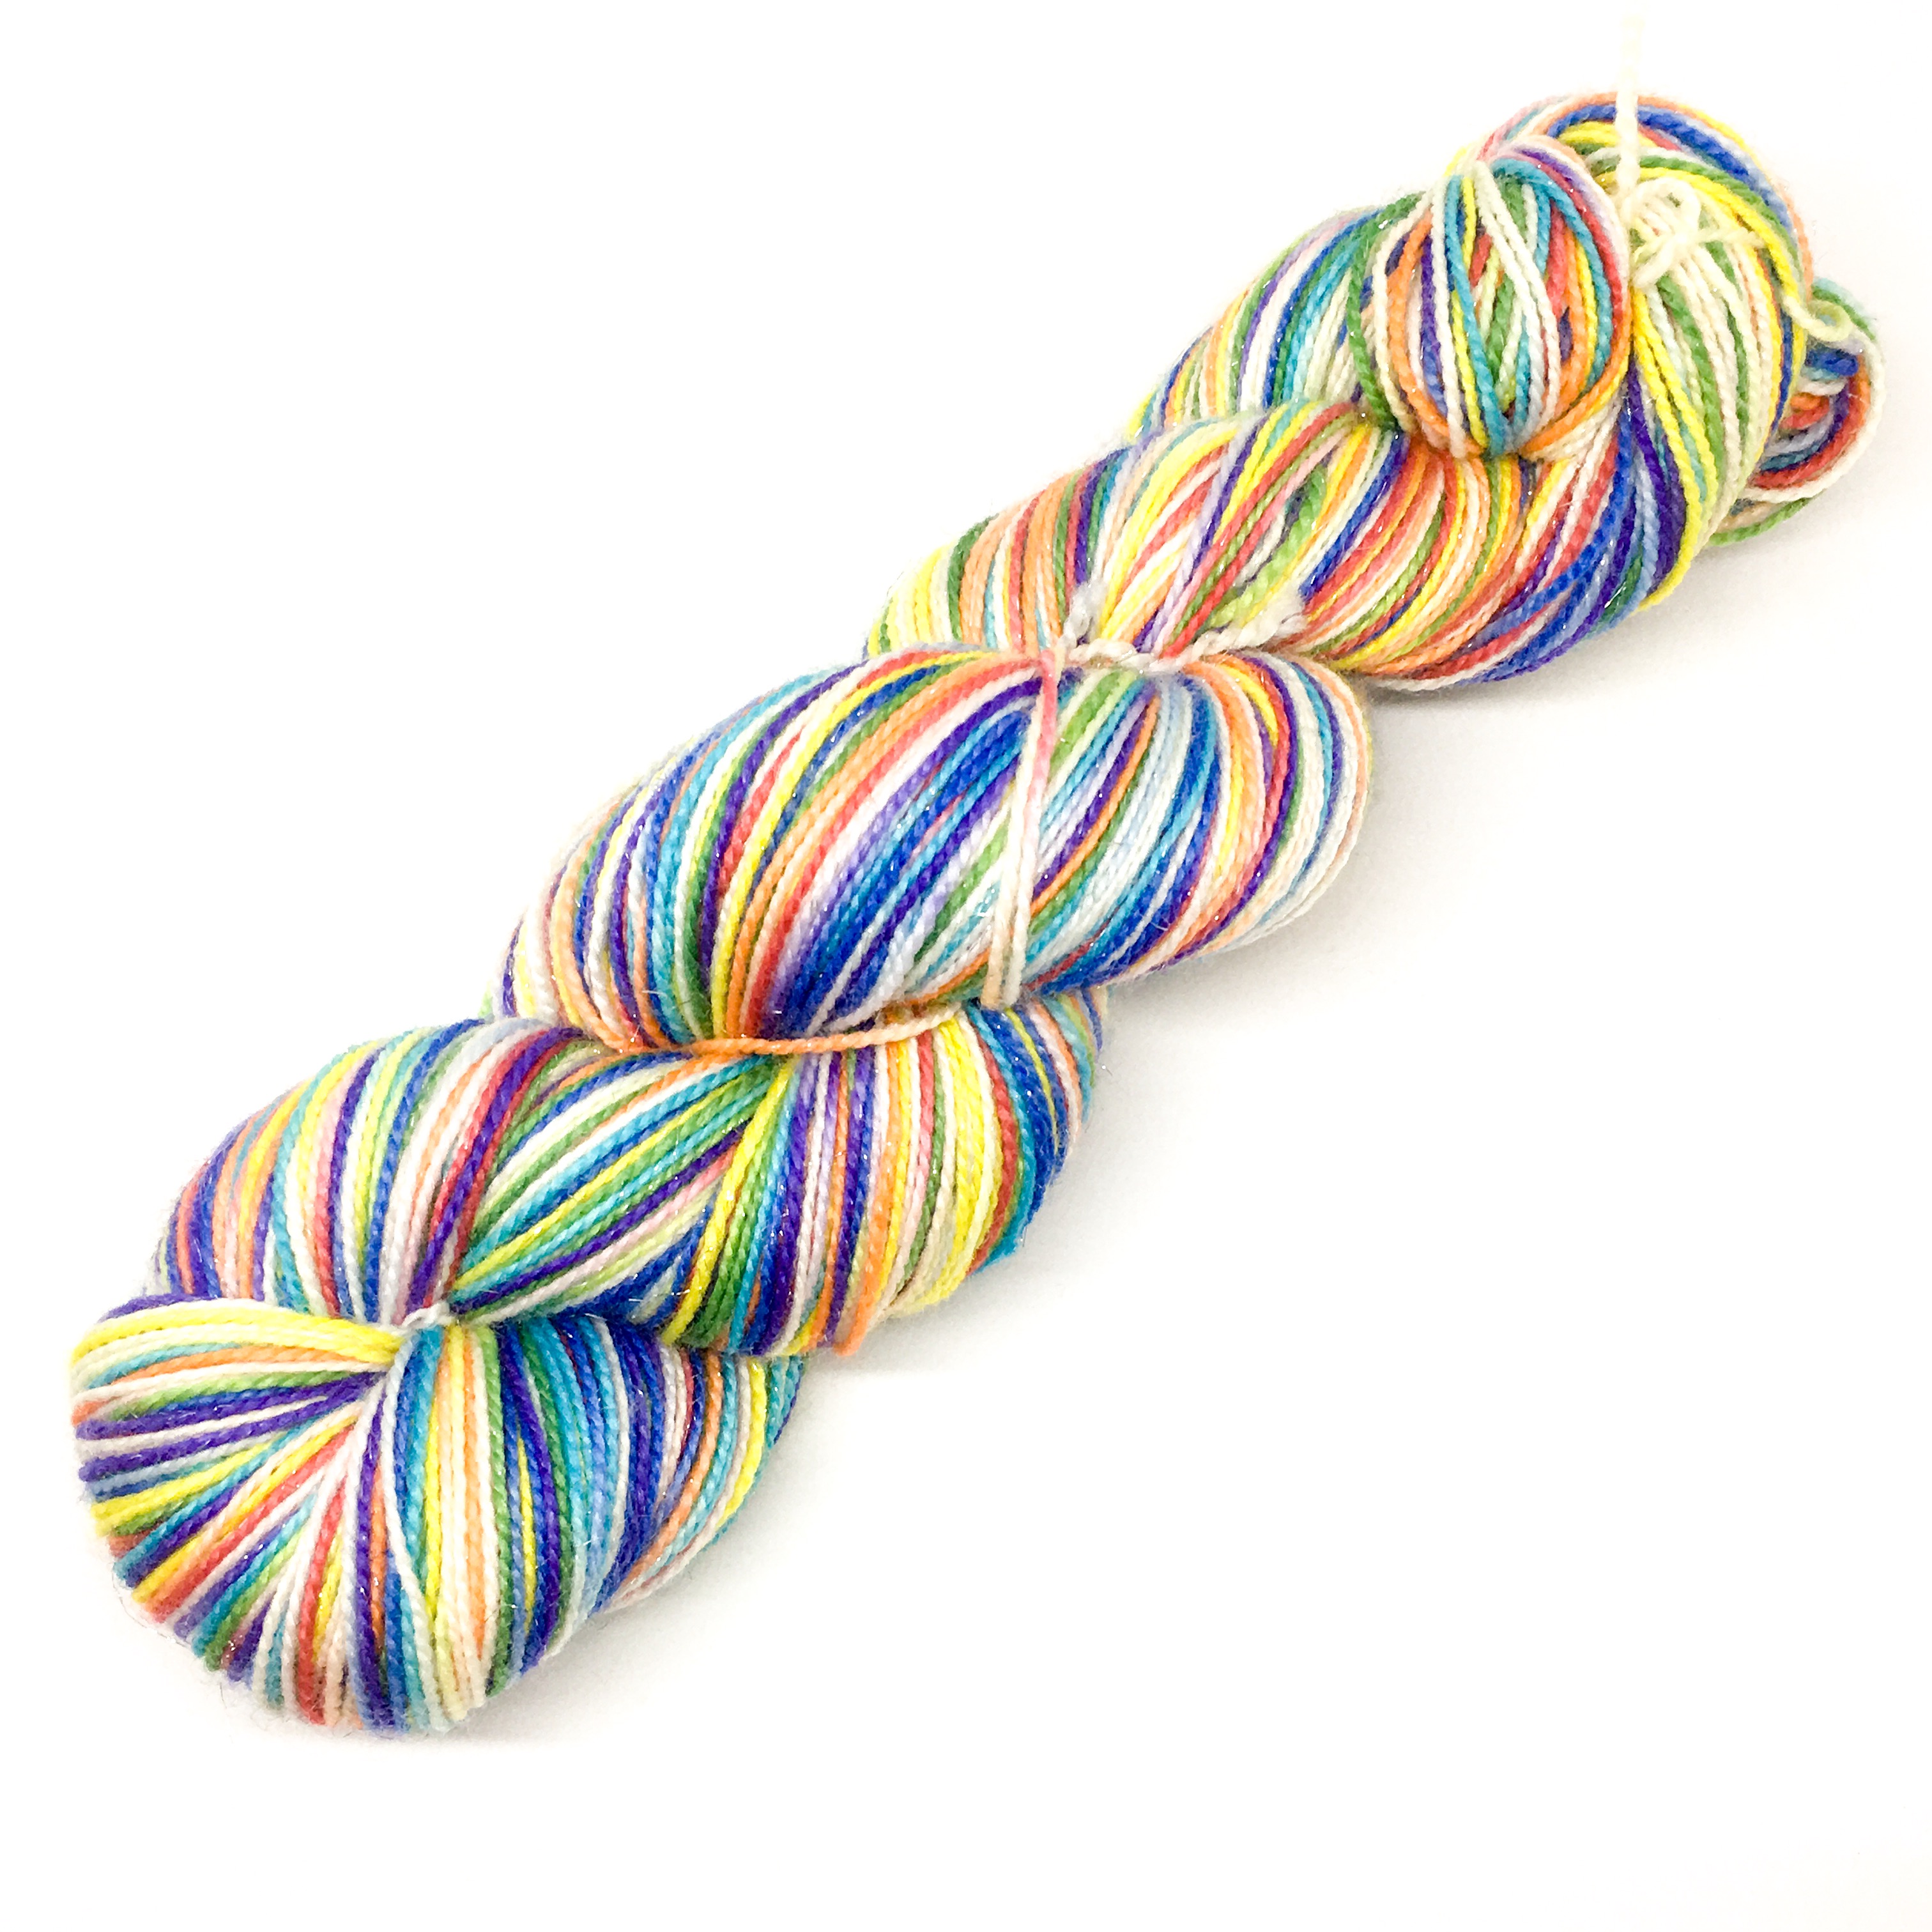 Rainbow 4 ply yarn, 100g skein, sparkly or plain, hand painted yarn